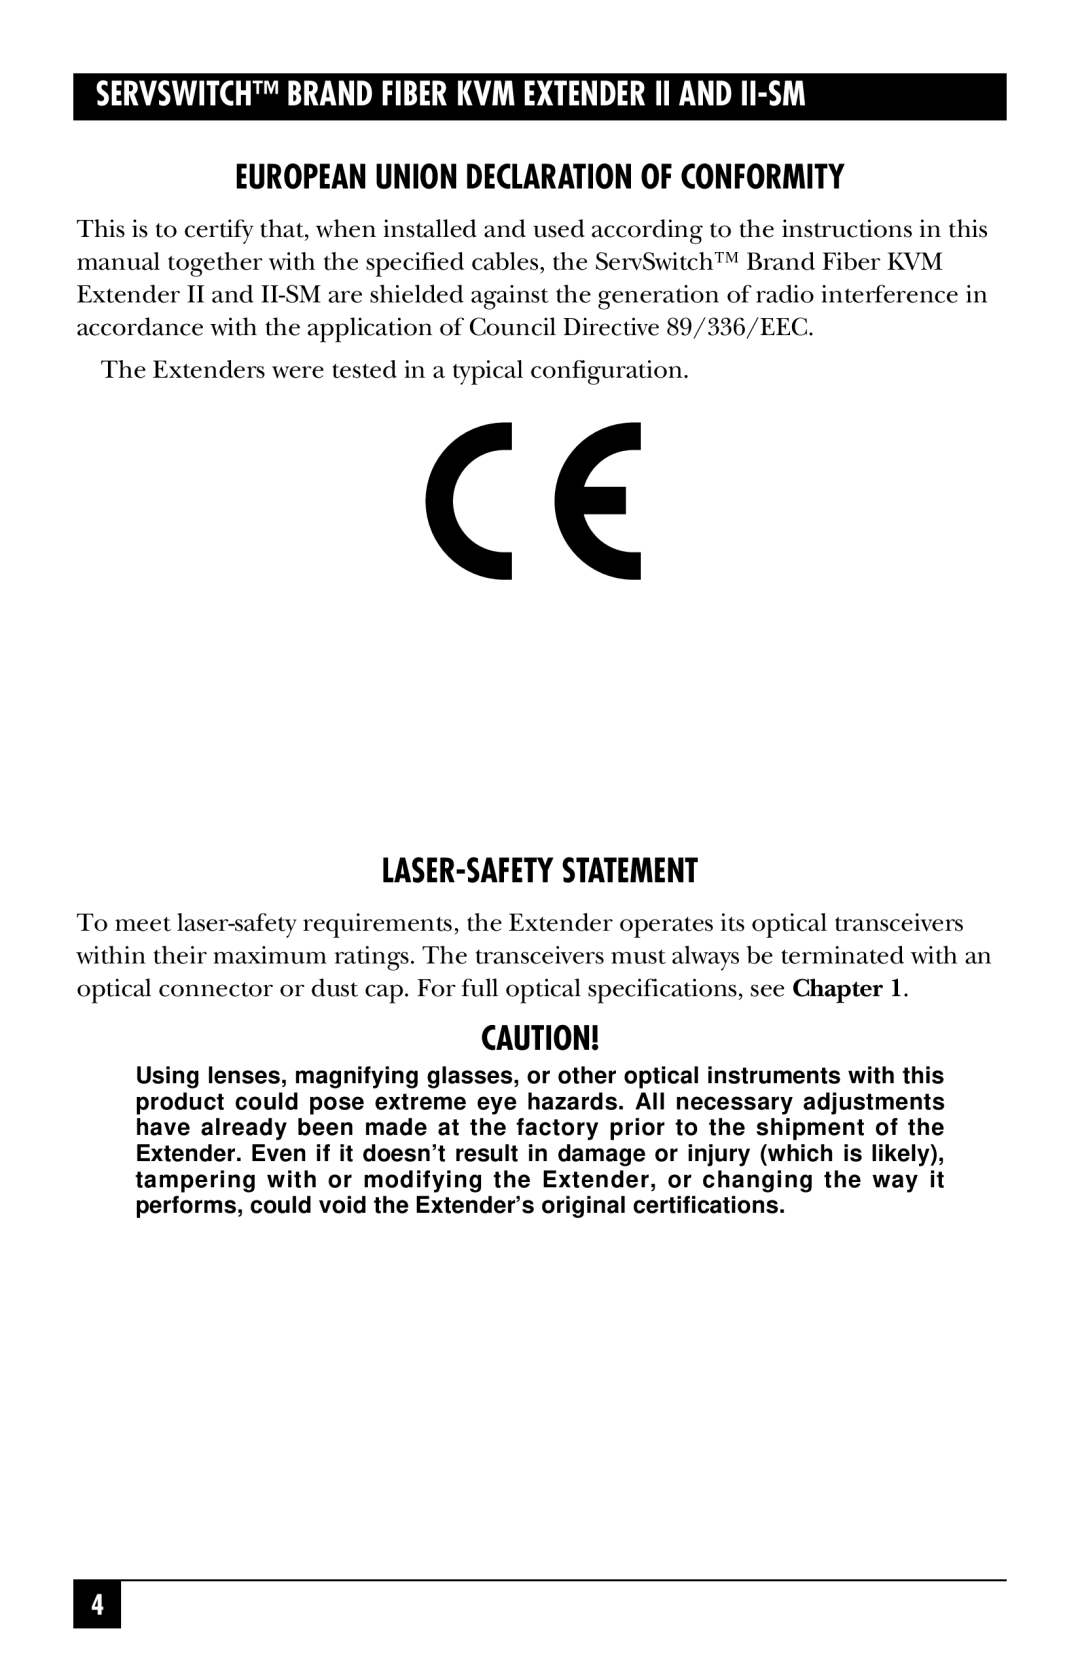 Black Box ACS251A, ACS250A manual European Union Declaration Of Conformity, Laser-Safety Statement 